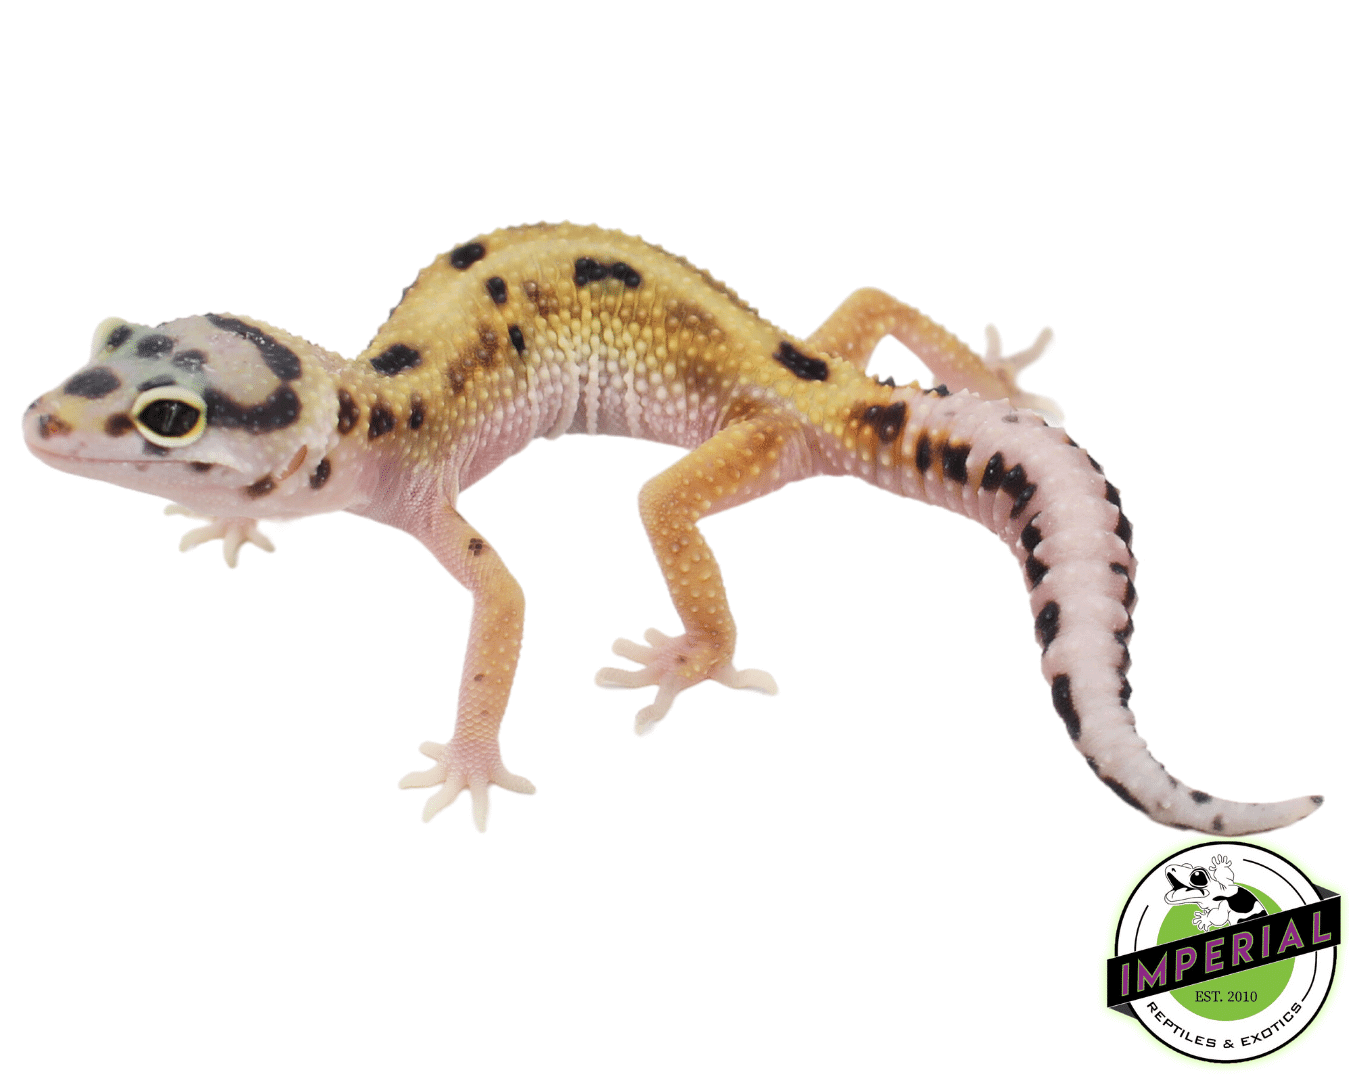 leopard geckos for sale online